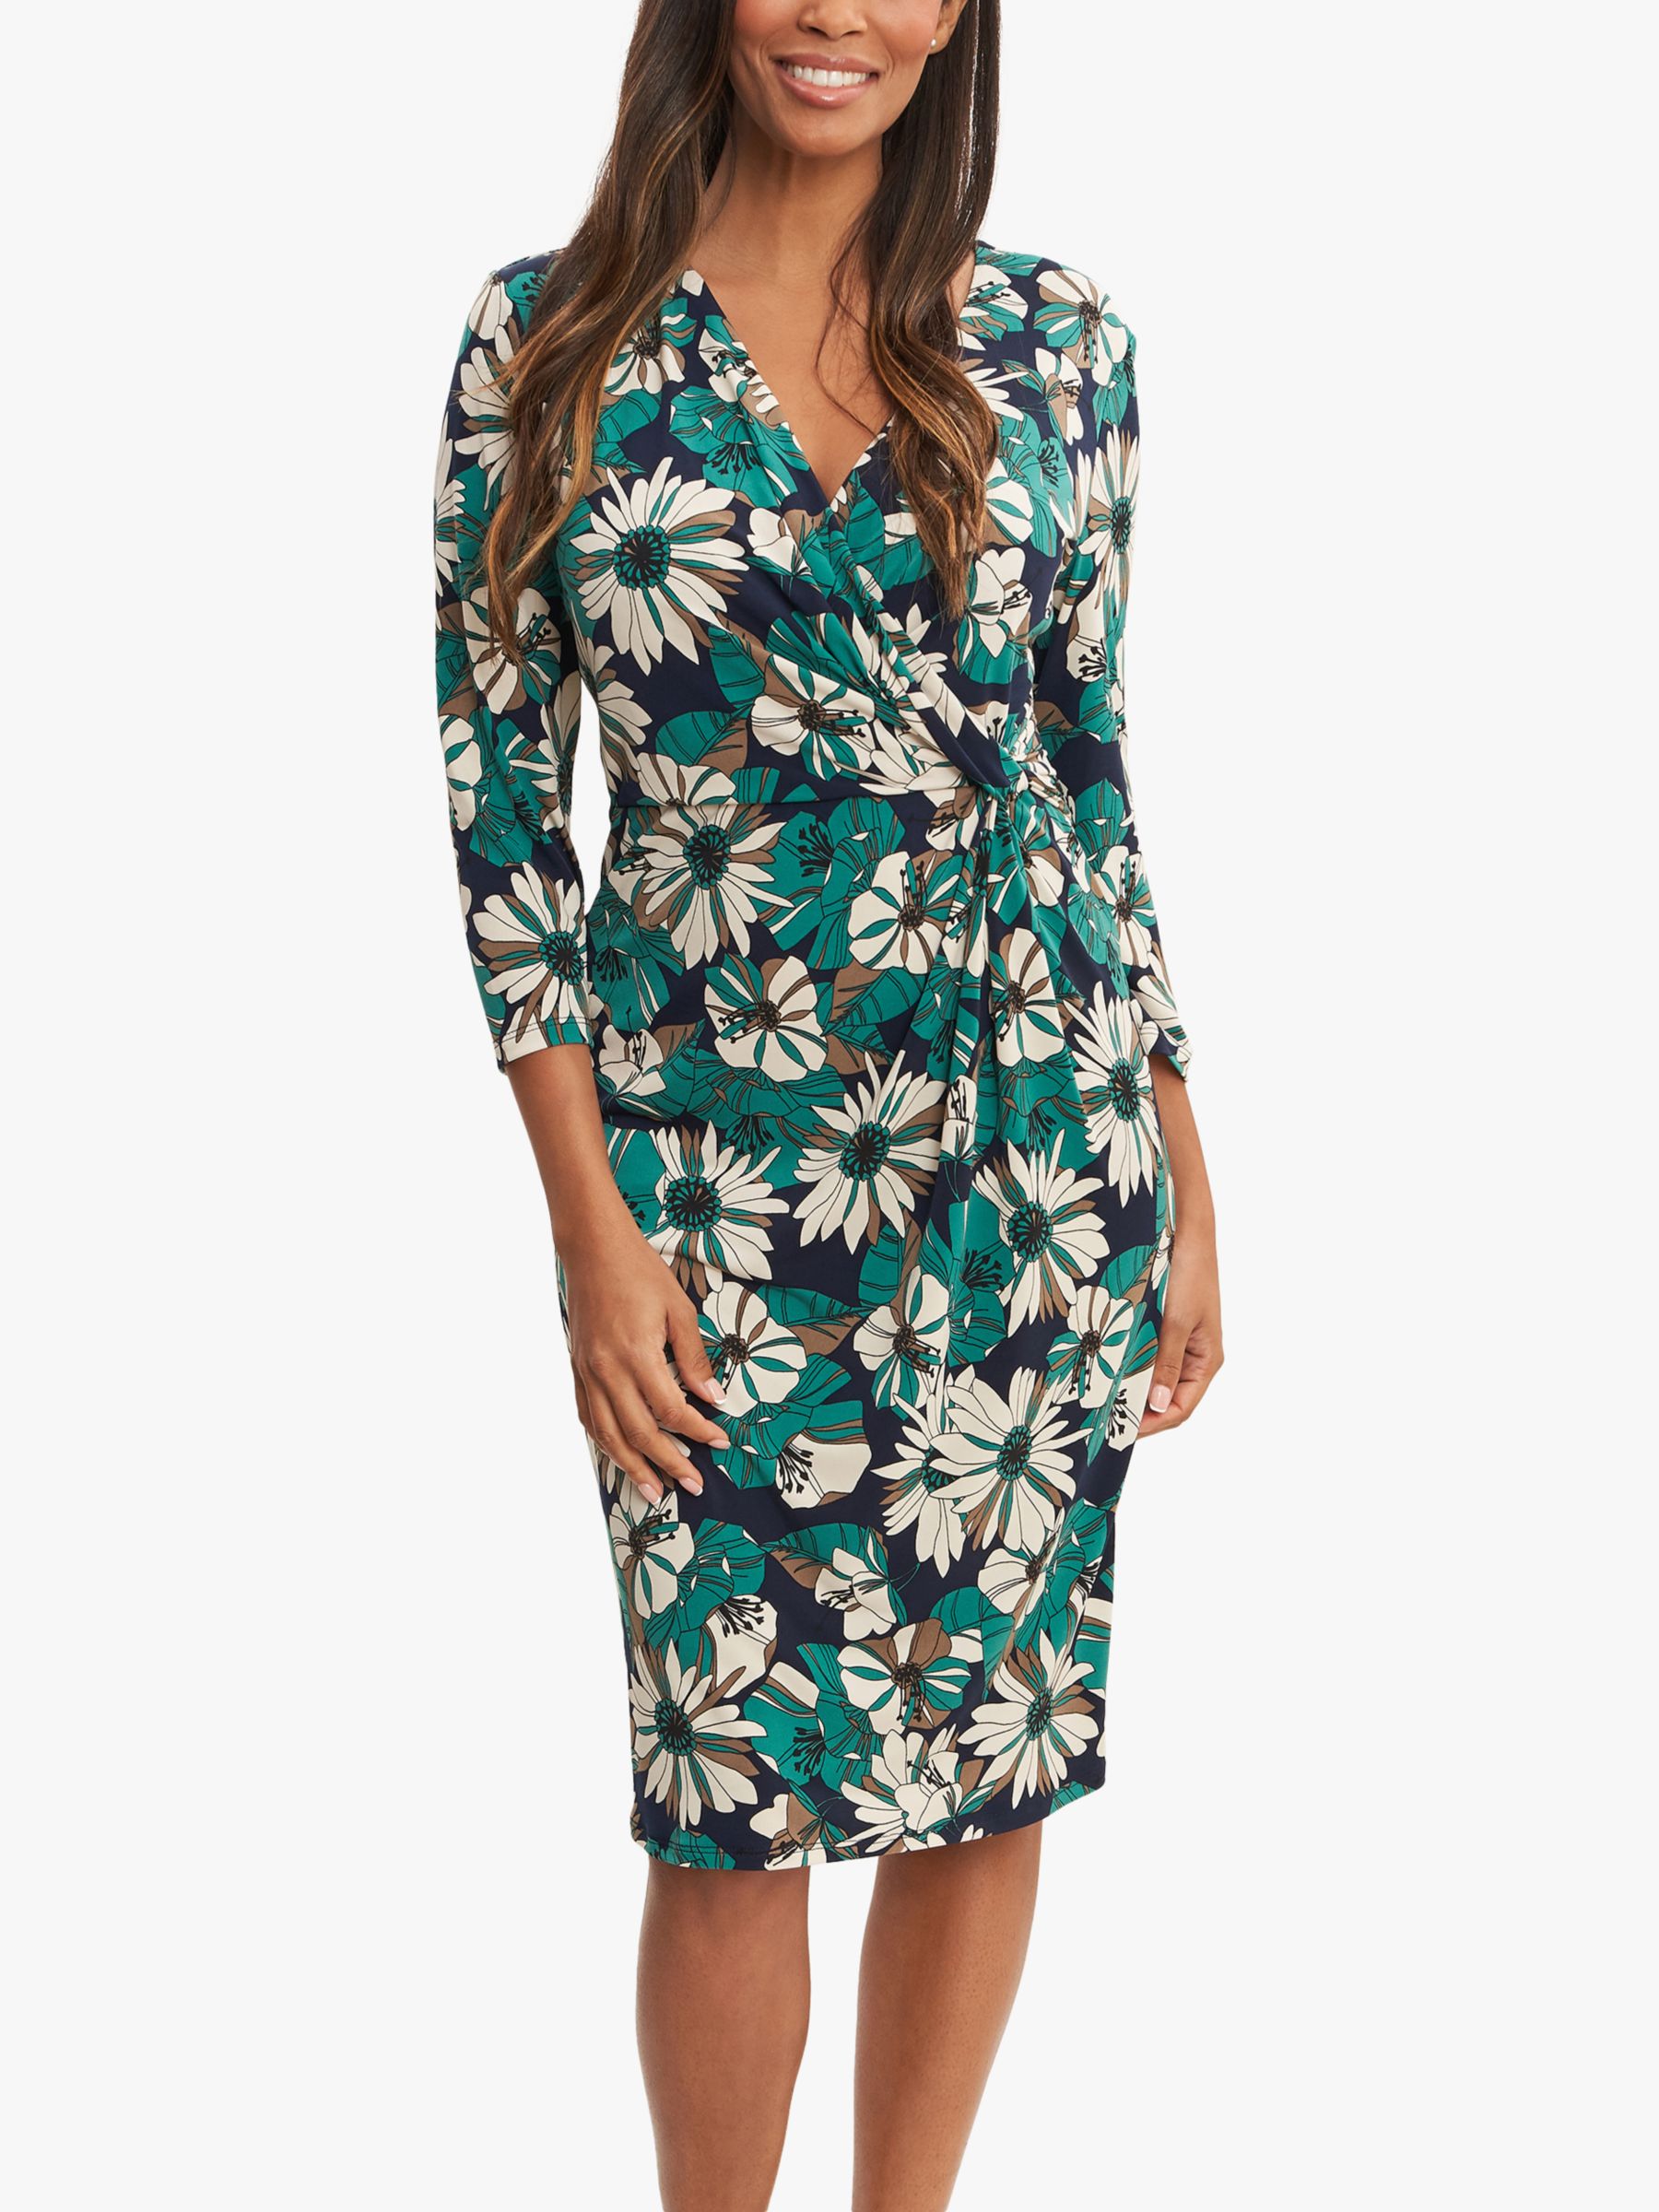 Gina Bacconi Nayla Floral Jersey Dress, Navy/Green